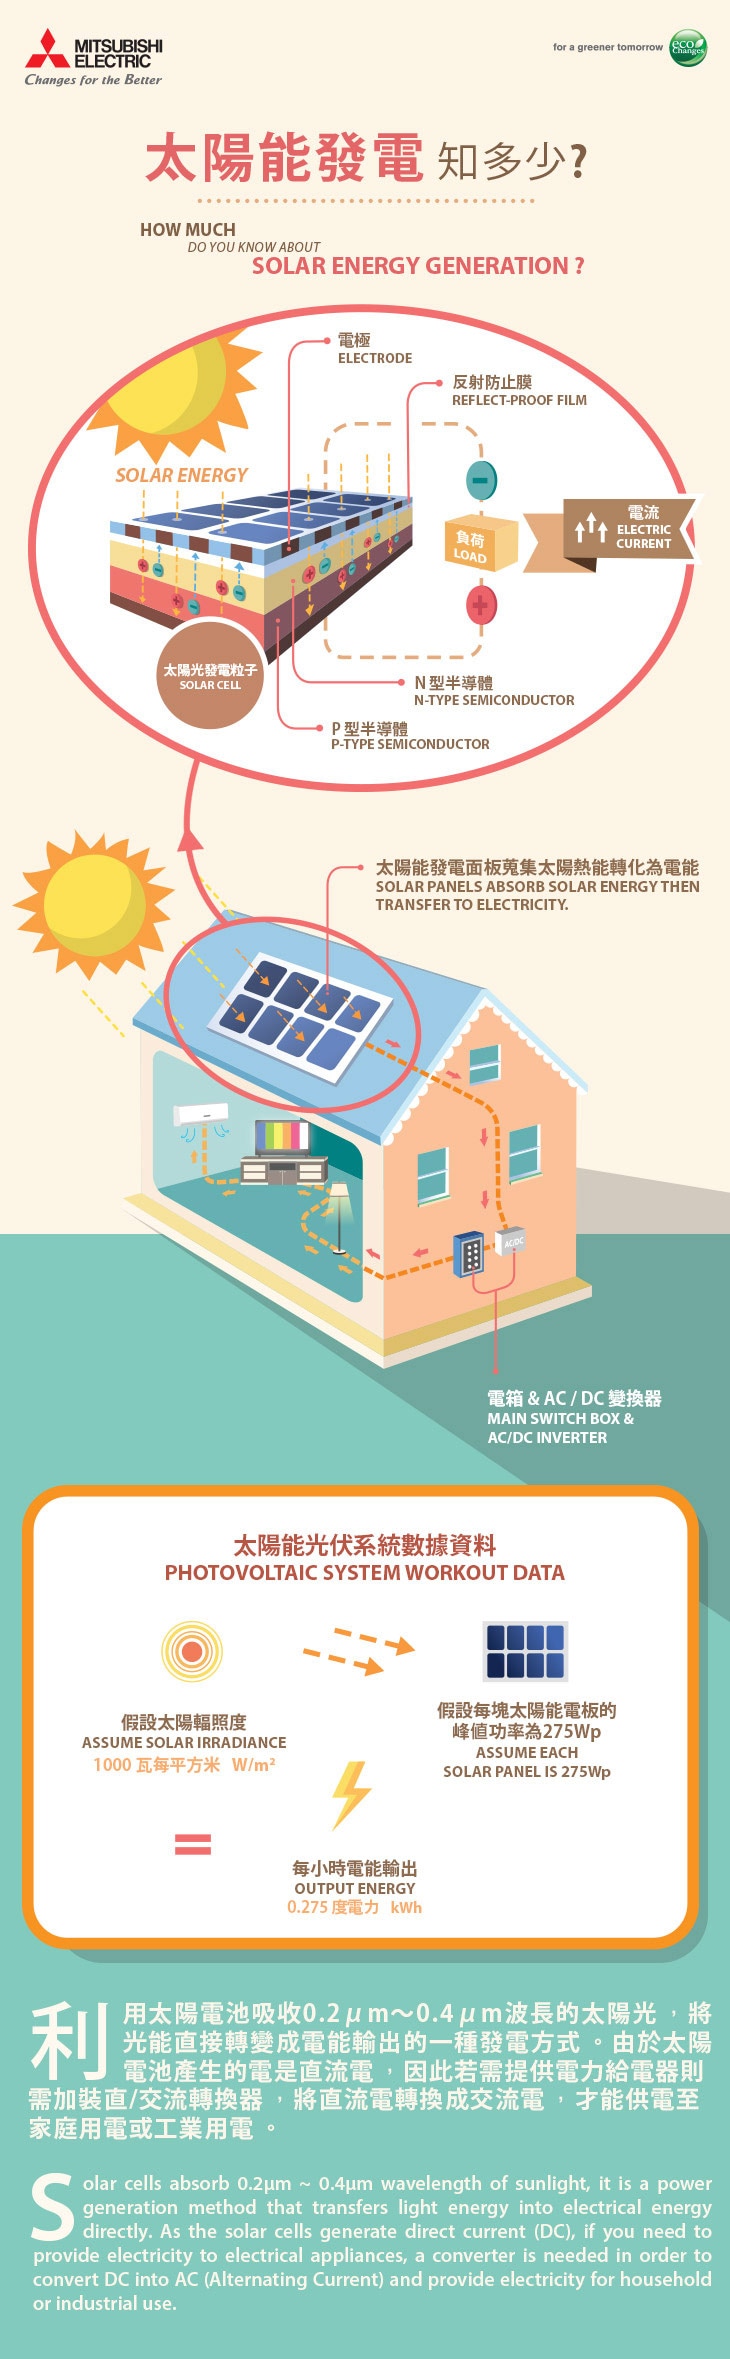 ME-HK Solar Energy